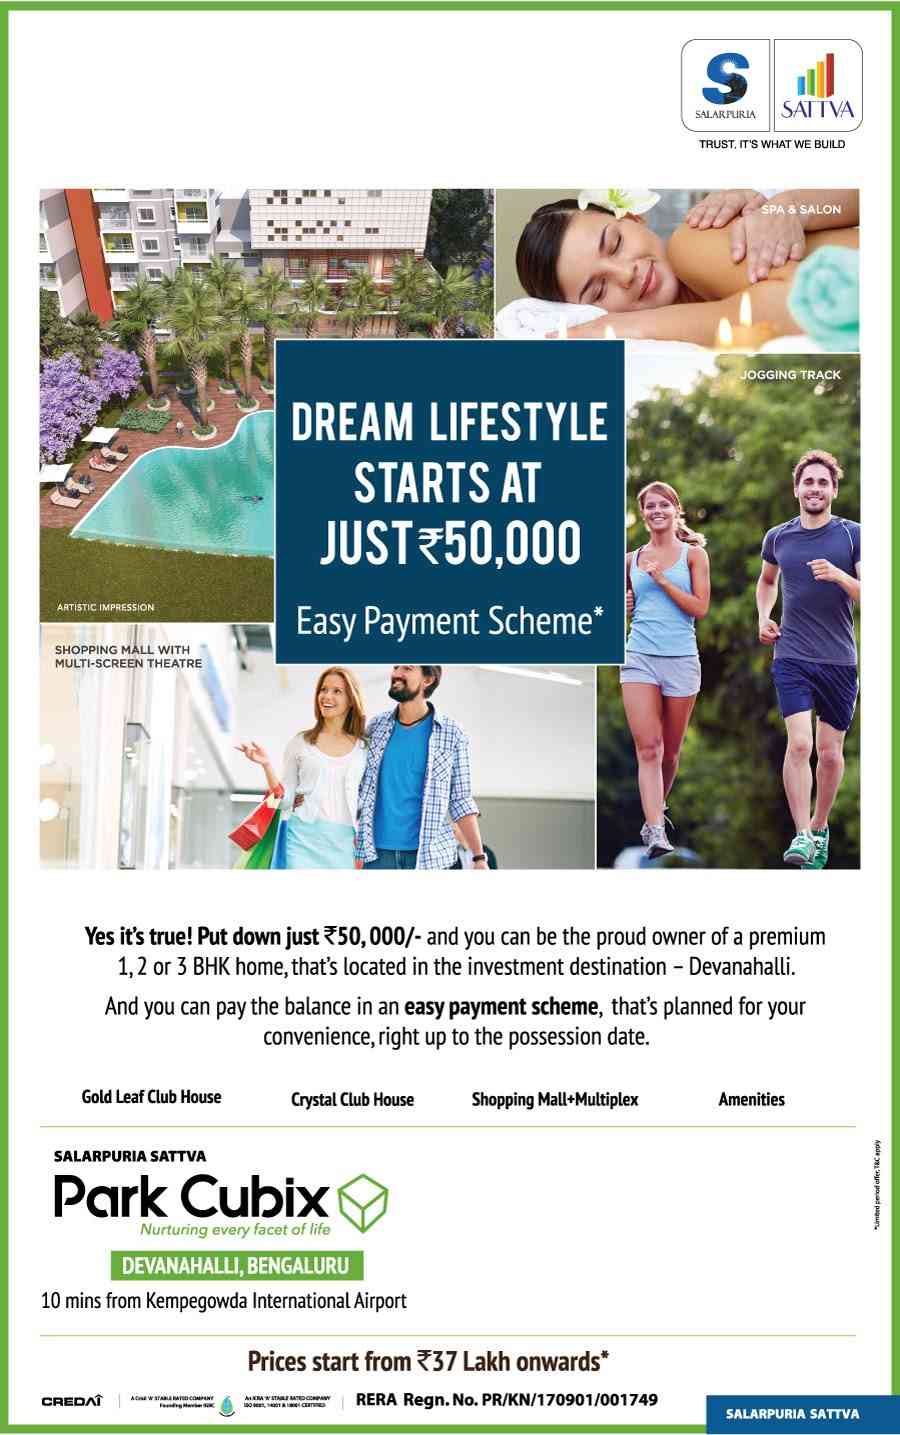 Dream lifestyle starts at just Rs 50000 at Salarpuria Sattva Park Cubix in Devanahalli, Bangalore Update